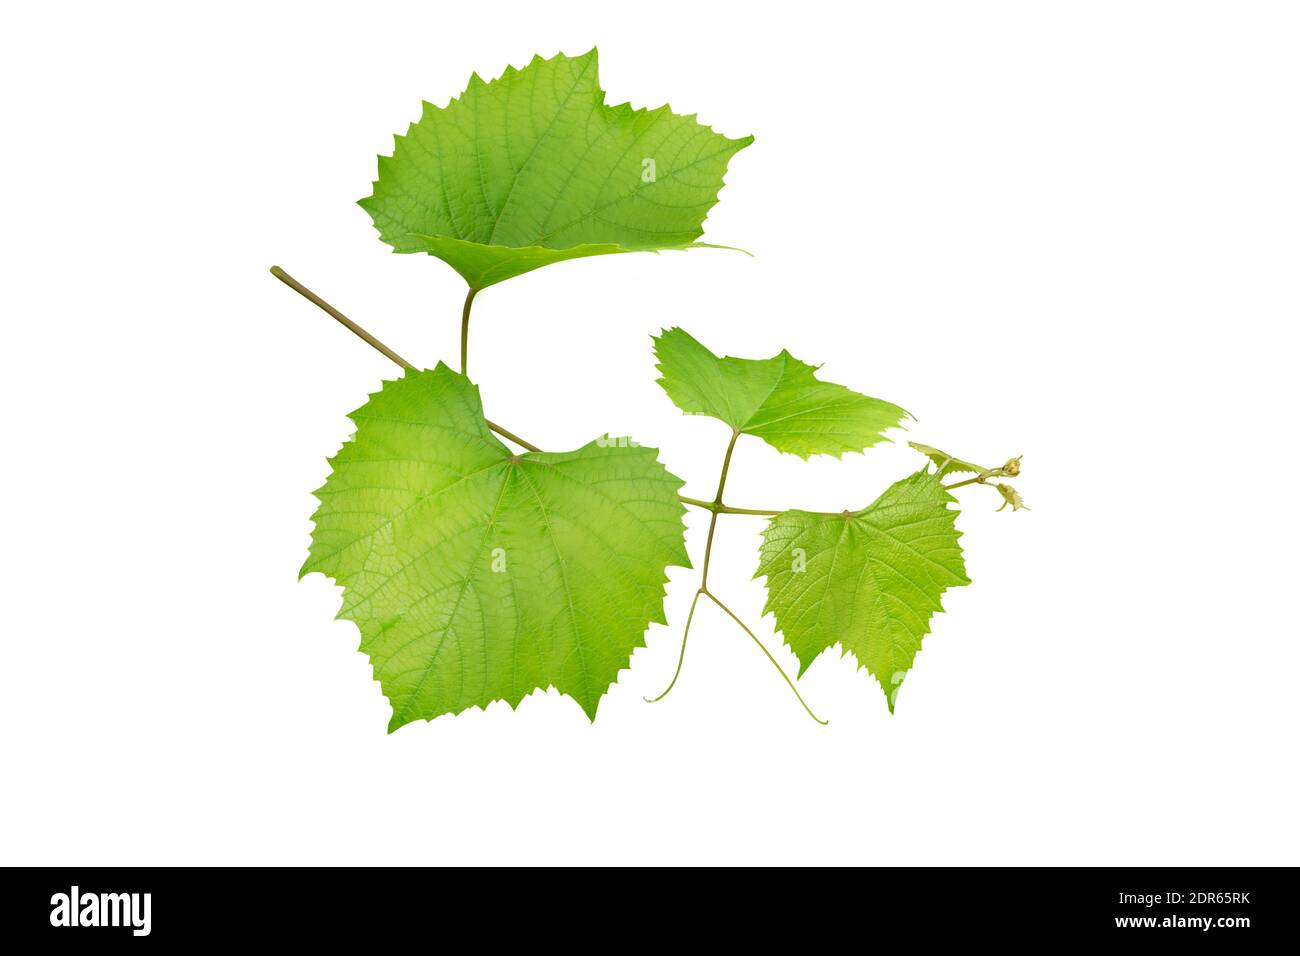 Grape branch isolated on white. Vine with green fresh leaves and tendrils. Grapevine. Vitis vinifera plant. Stock Photo